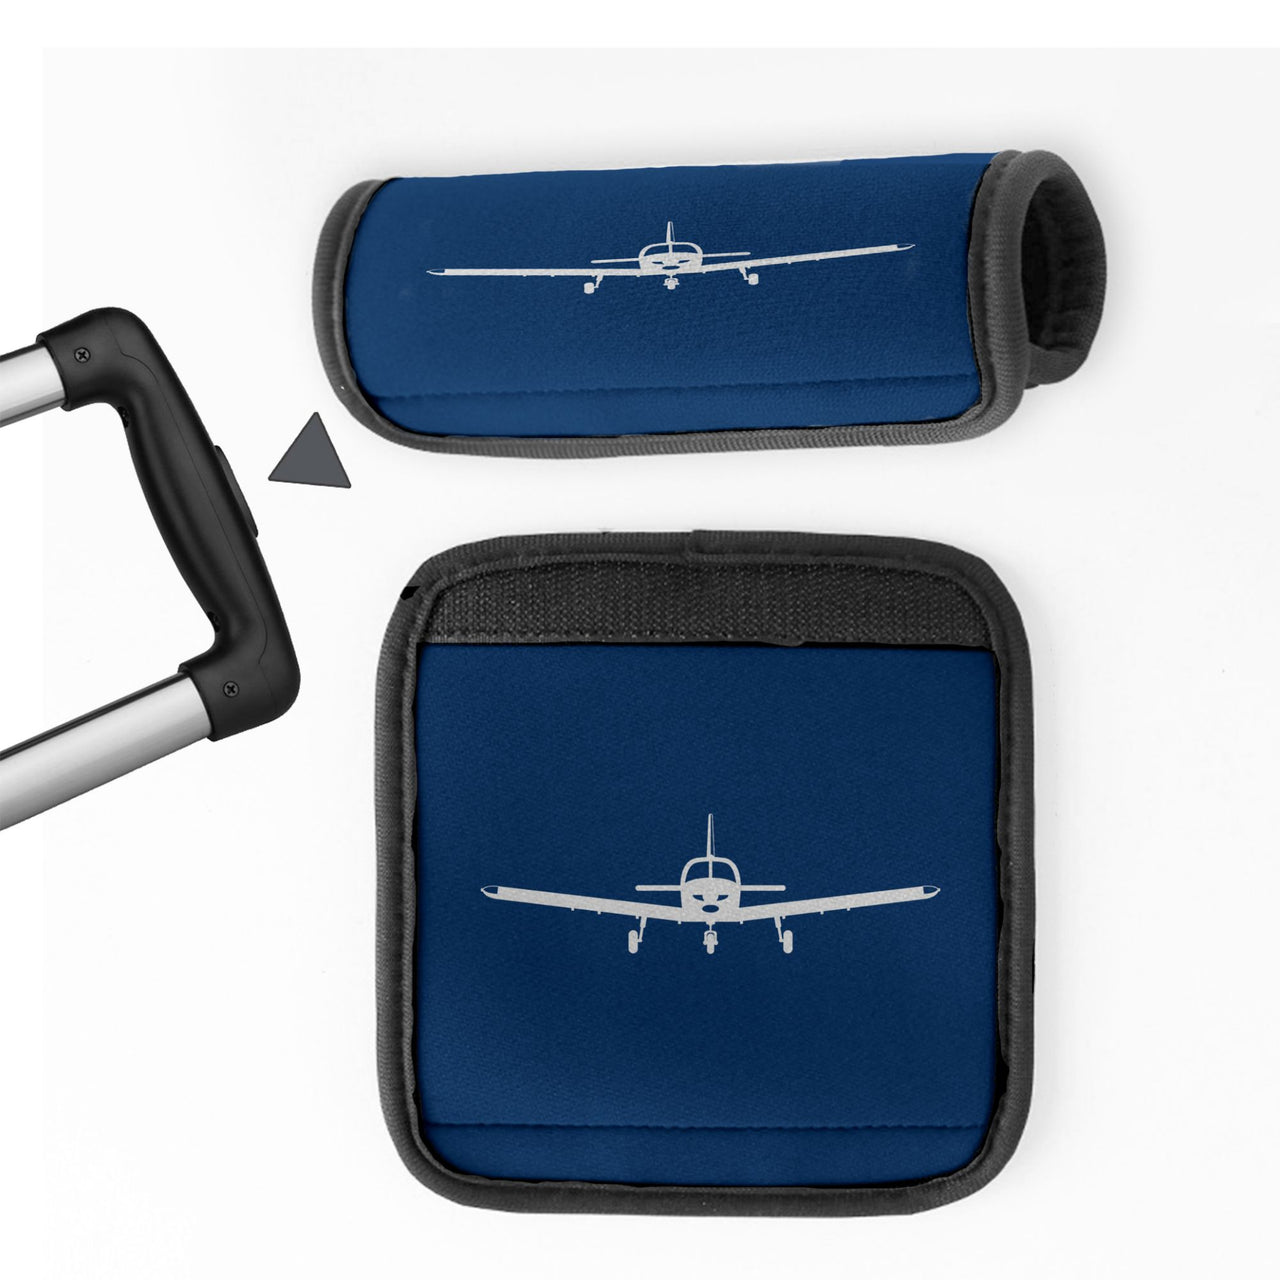 Piper PA28 Silhouette Plane Designed Neoprene Luggage Handle Covers